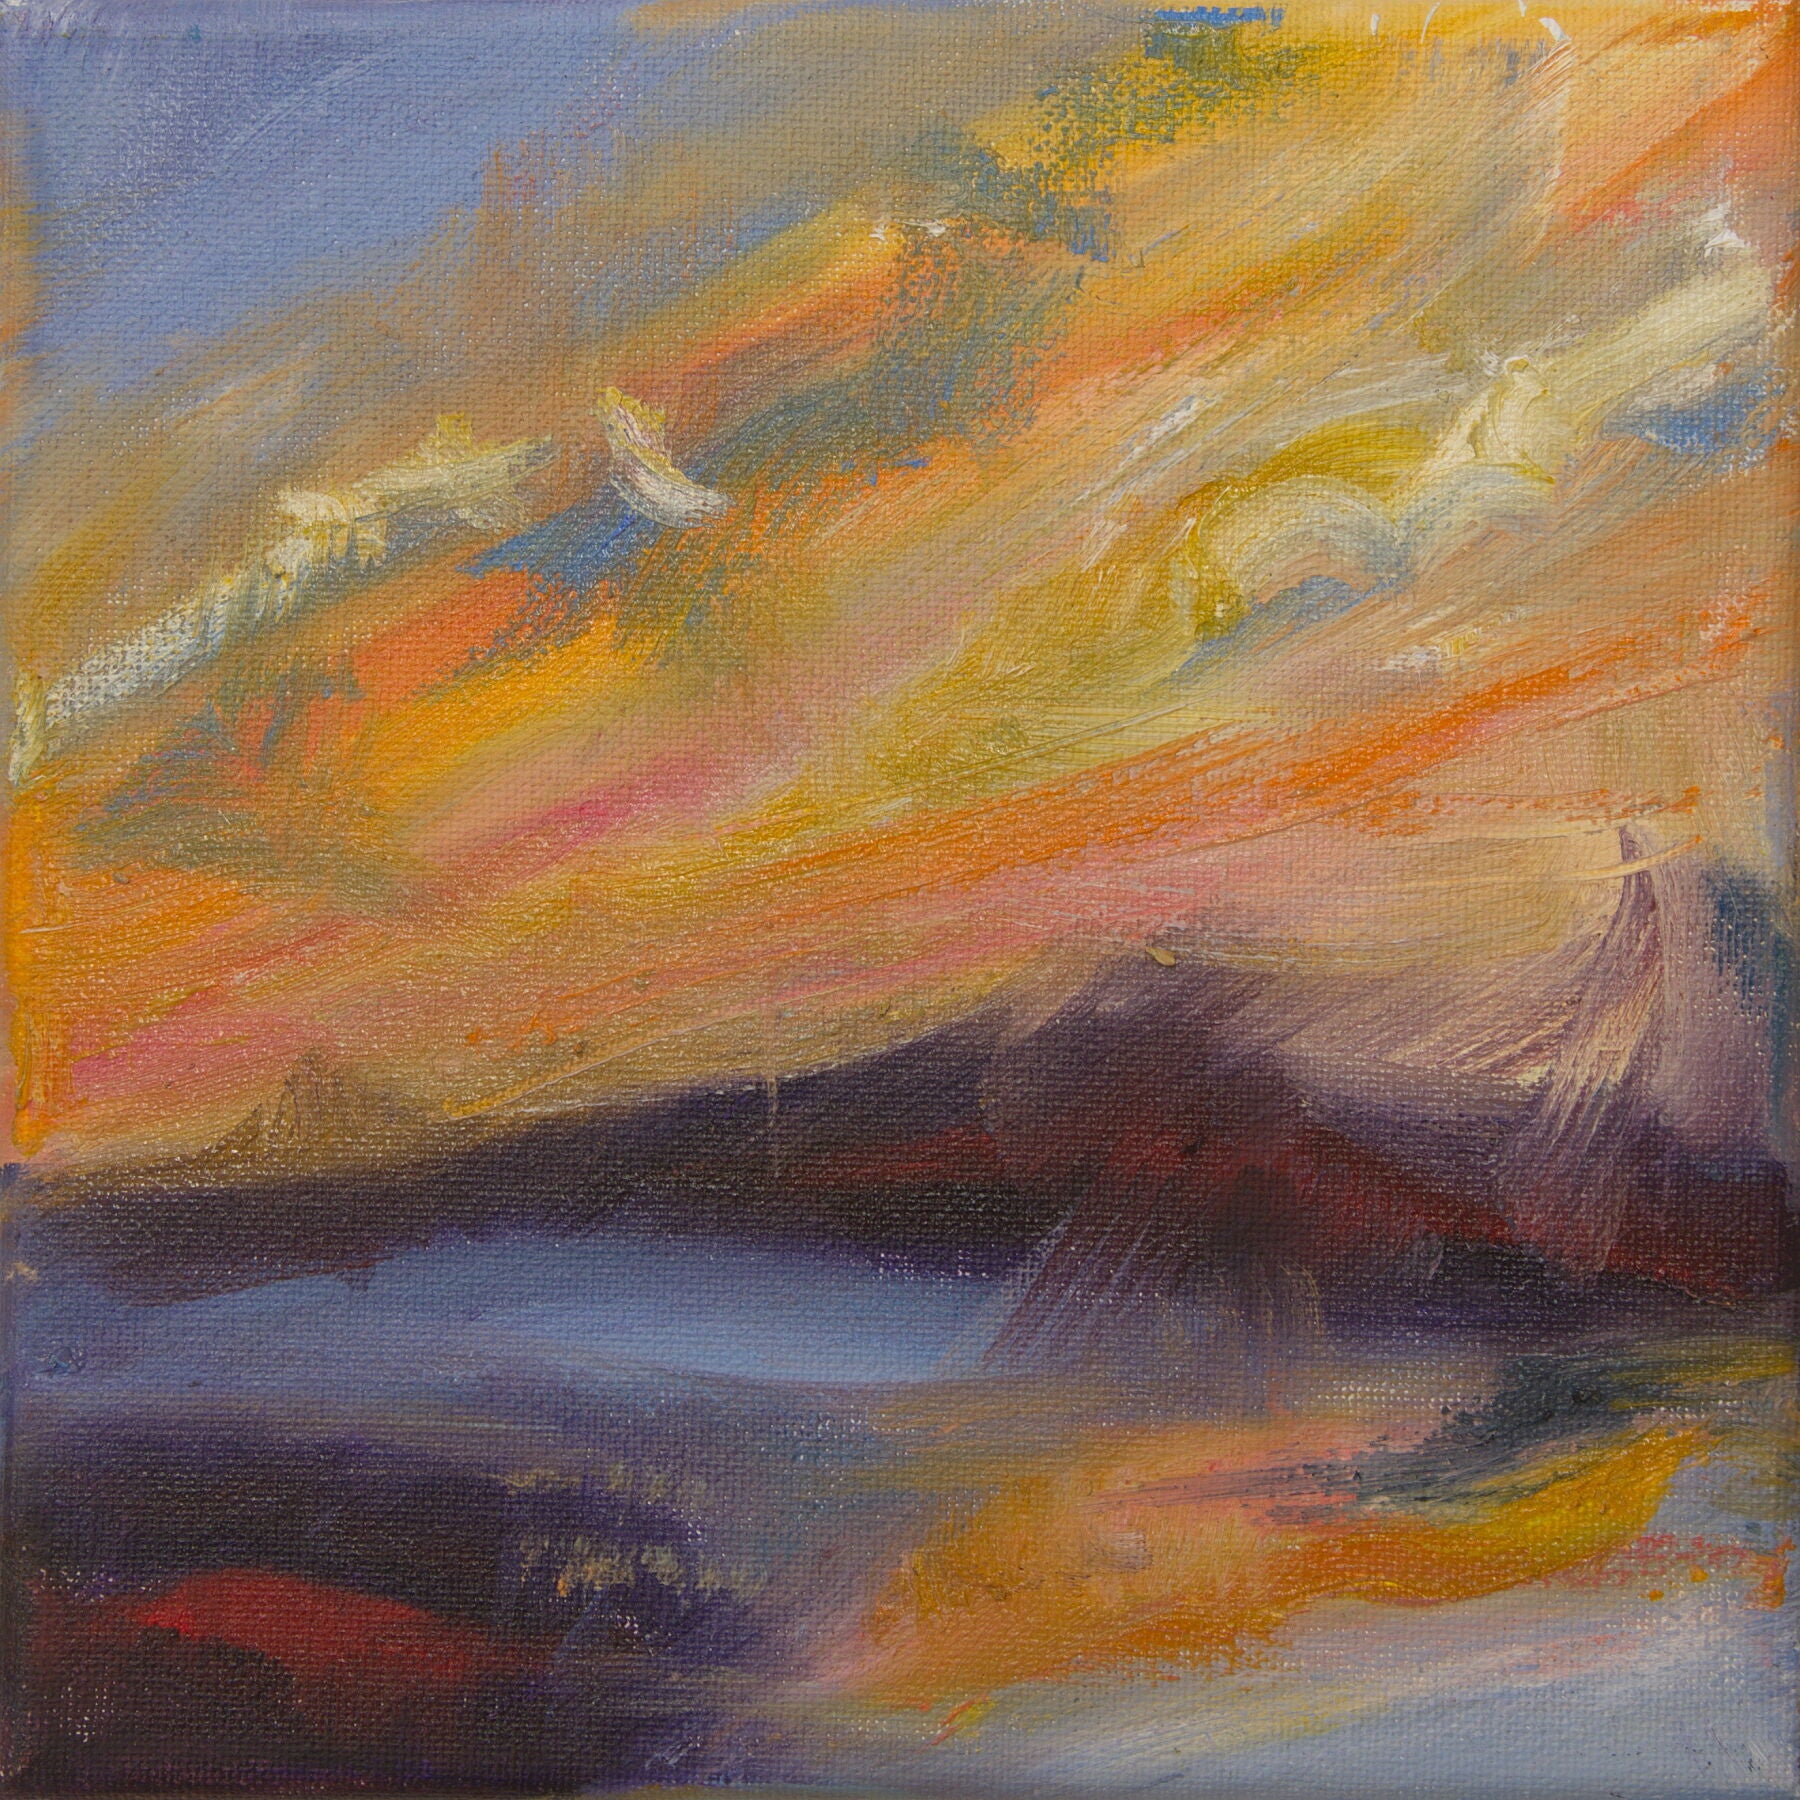 Print of Orkney sunset, Scotland by Jeanne Bouza Rose